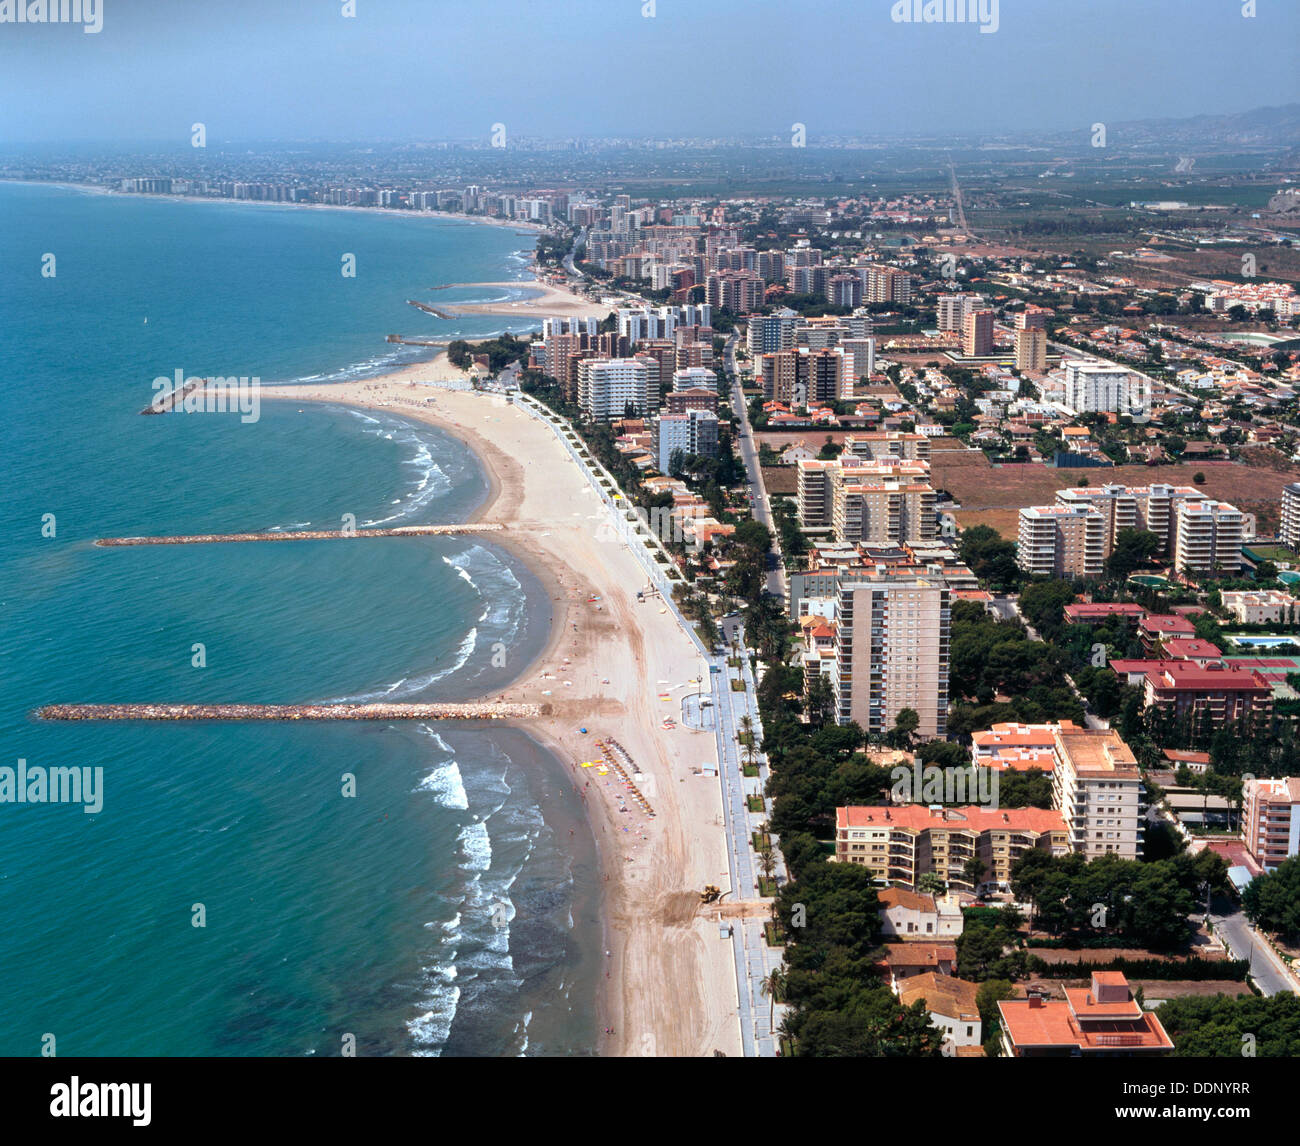 https://c8.alamy.com/comp/DDNYRR/aerial-view-of-benicassim-in-castellon-comunidad-valenciana-spain-DDNYRR.jpg